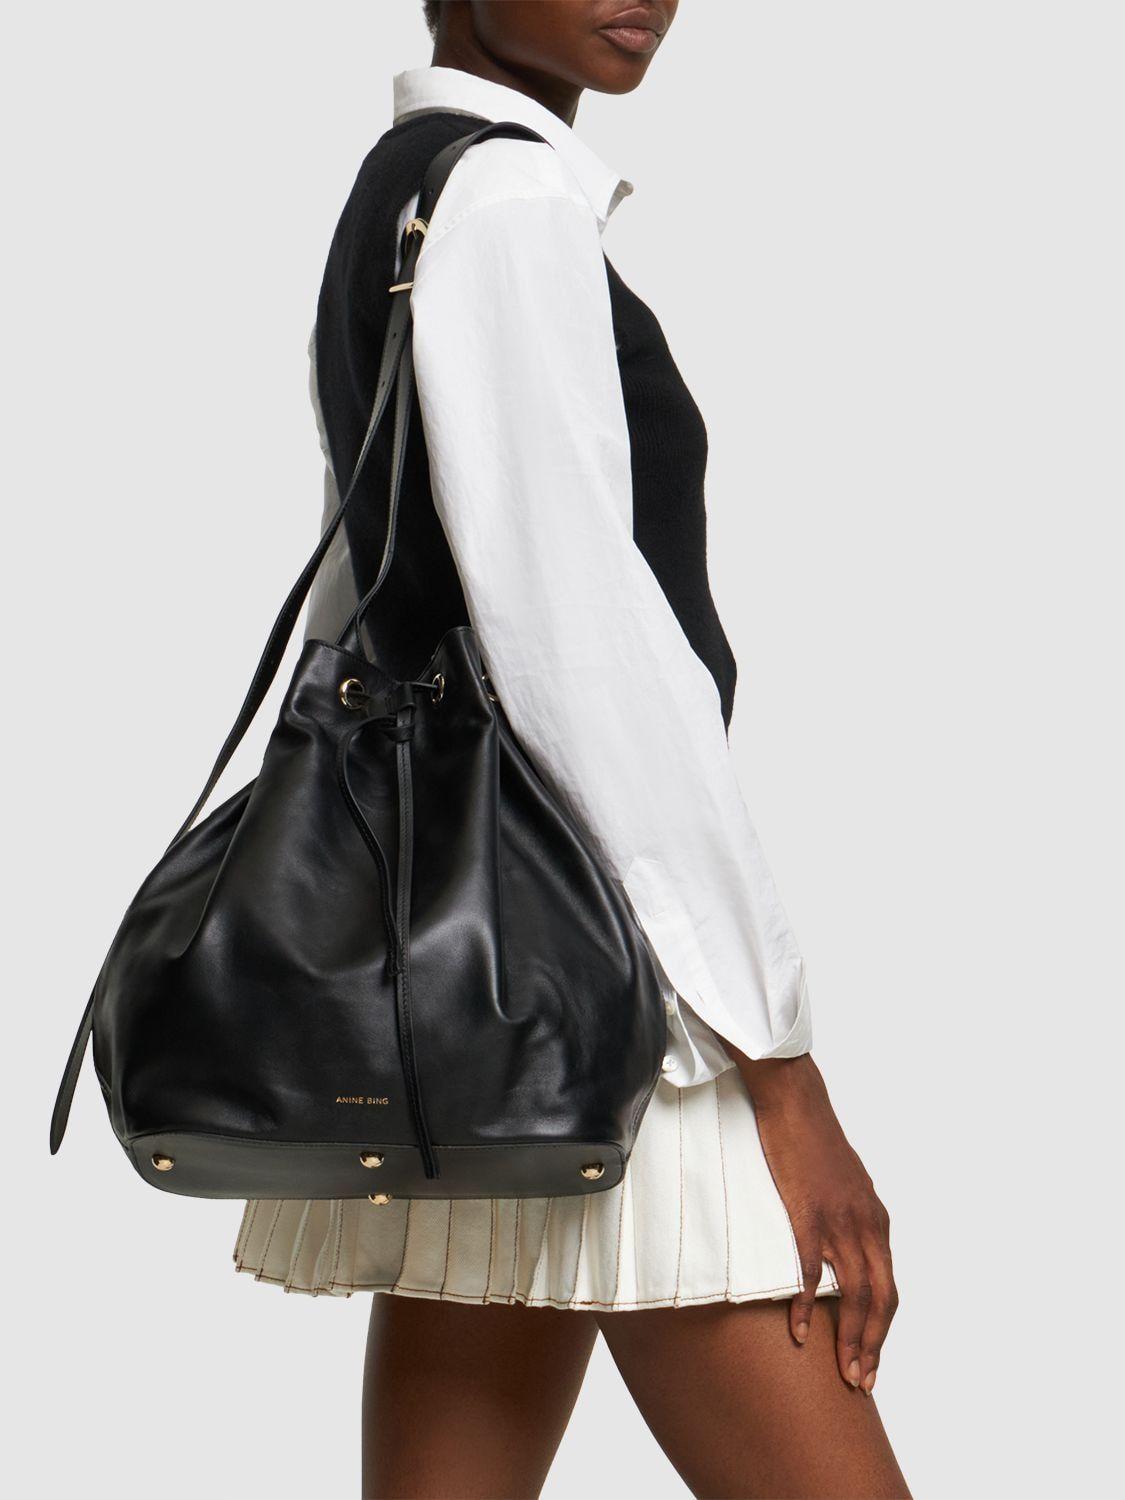 Anine Bing Alana Leather Bucket Bag in Black | Lyst